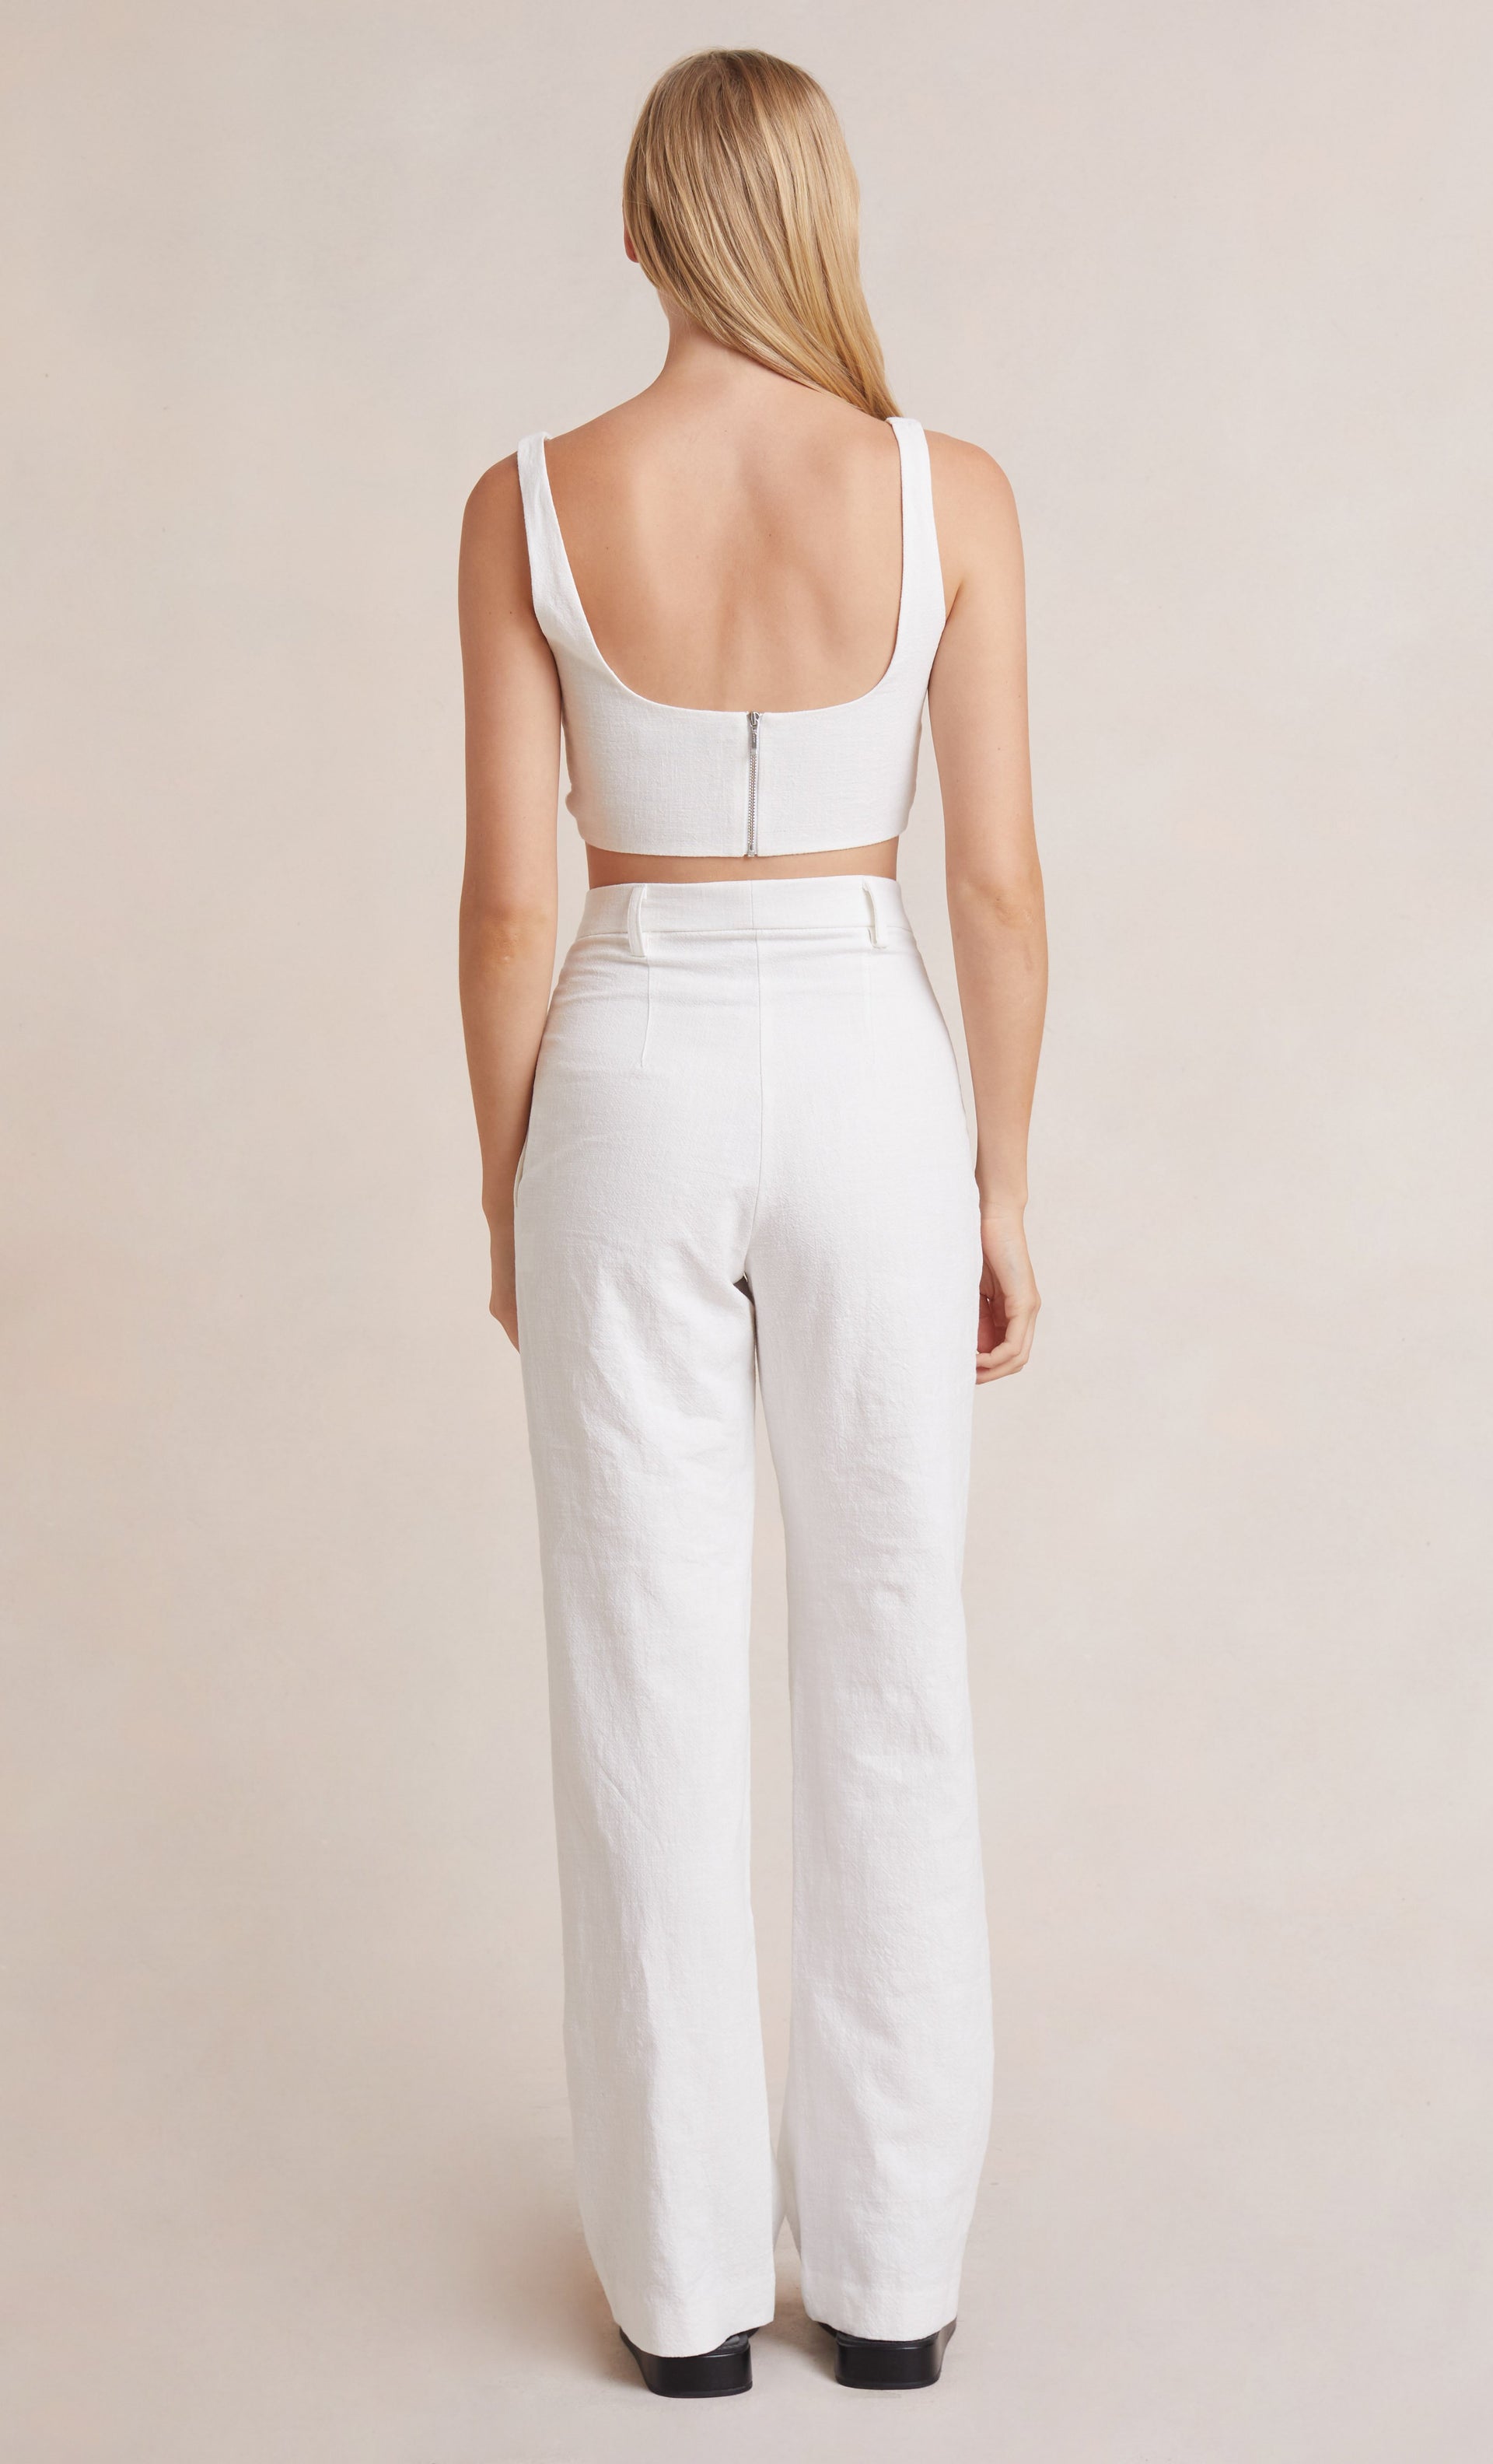 Buy NYDJ Women's Petite Linen Trouser, Optic White, 12P at Amazon.in